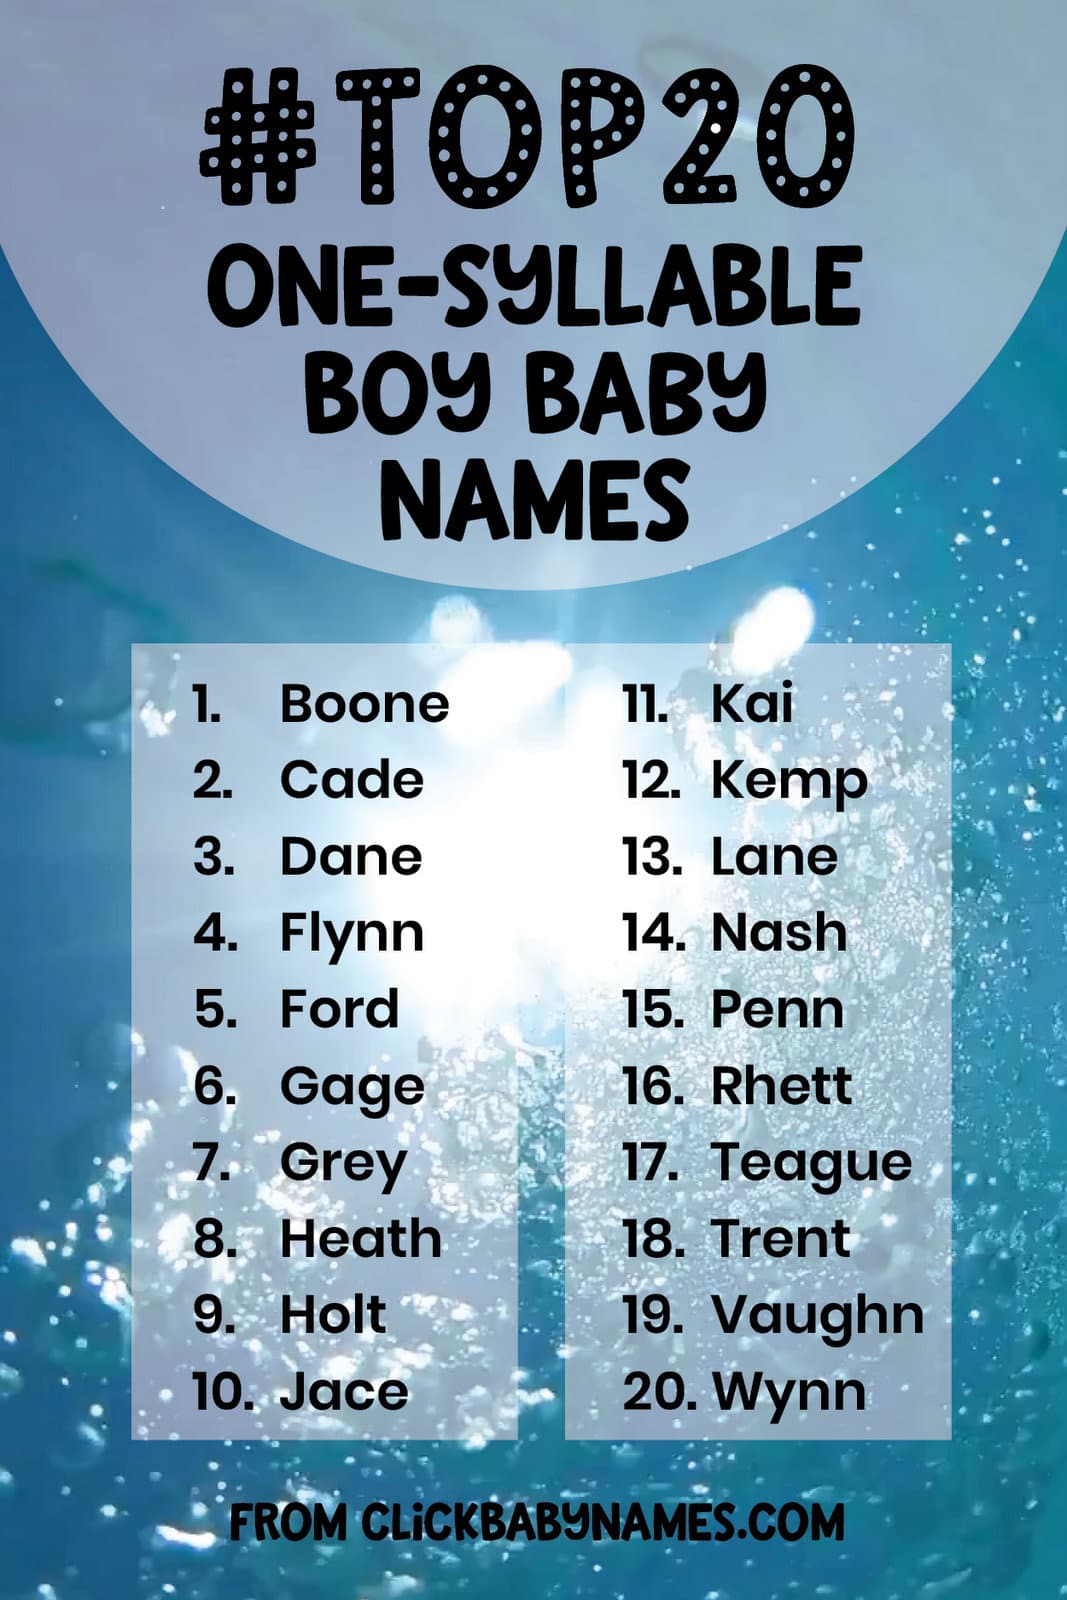 100 onesyllable boy baby names, at ClickBabyNames